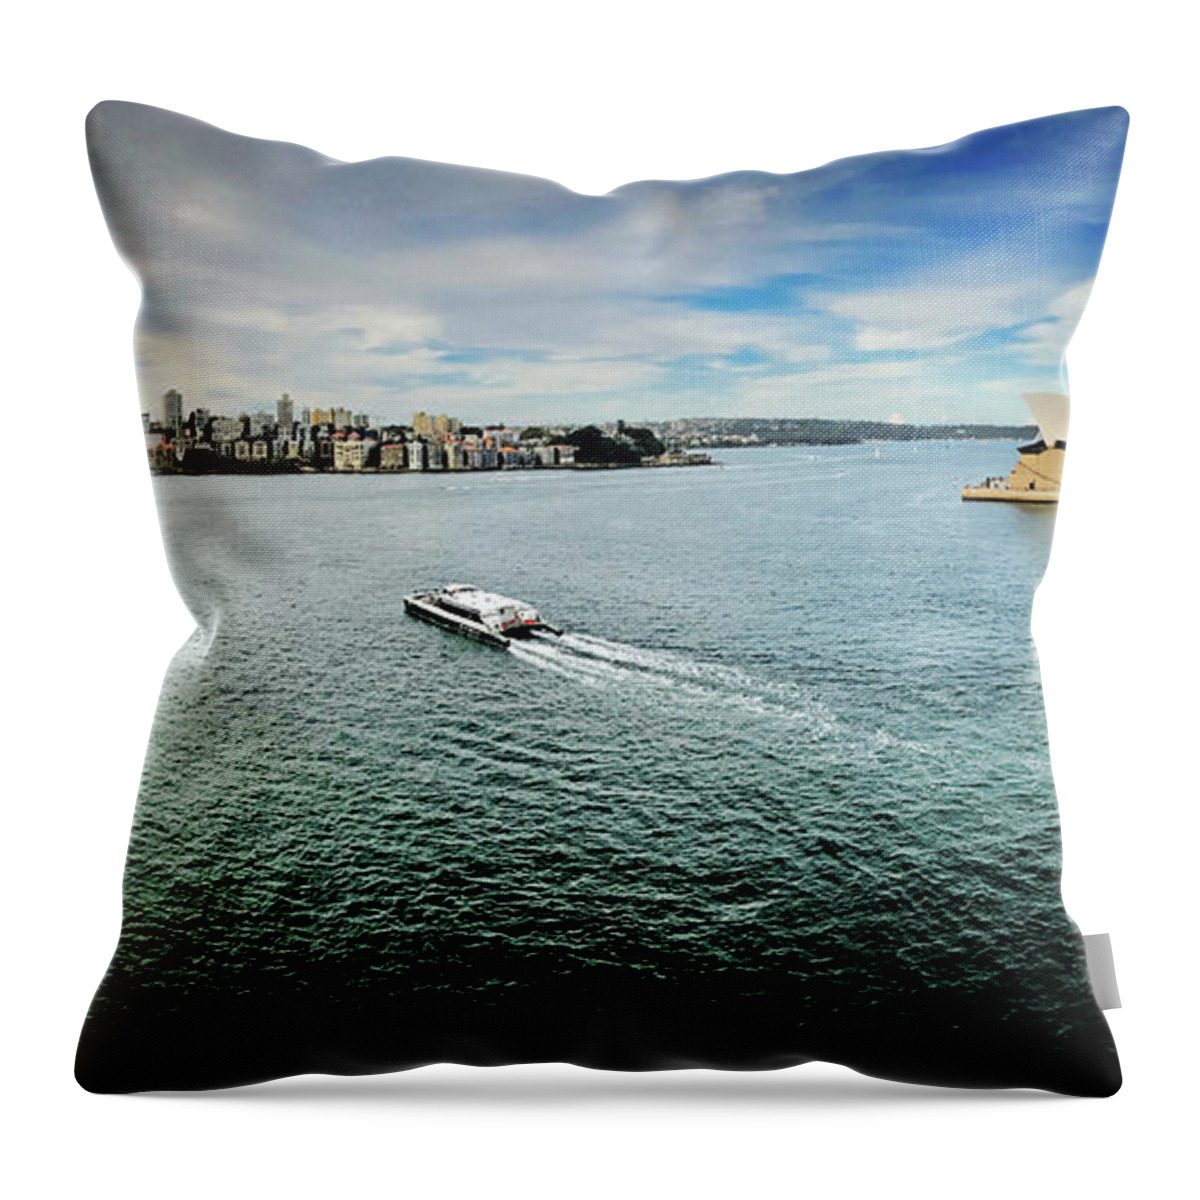 Sydney Throw Pillow featuring the photograph Sydney Harbour Panorama by Sarah Lilja